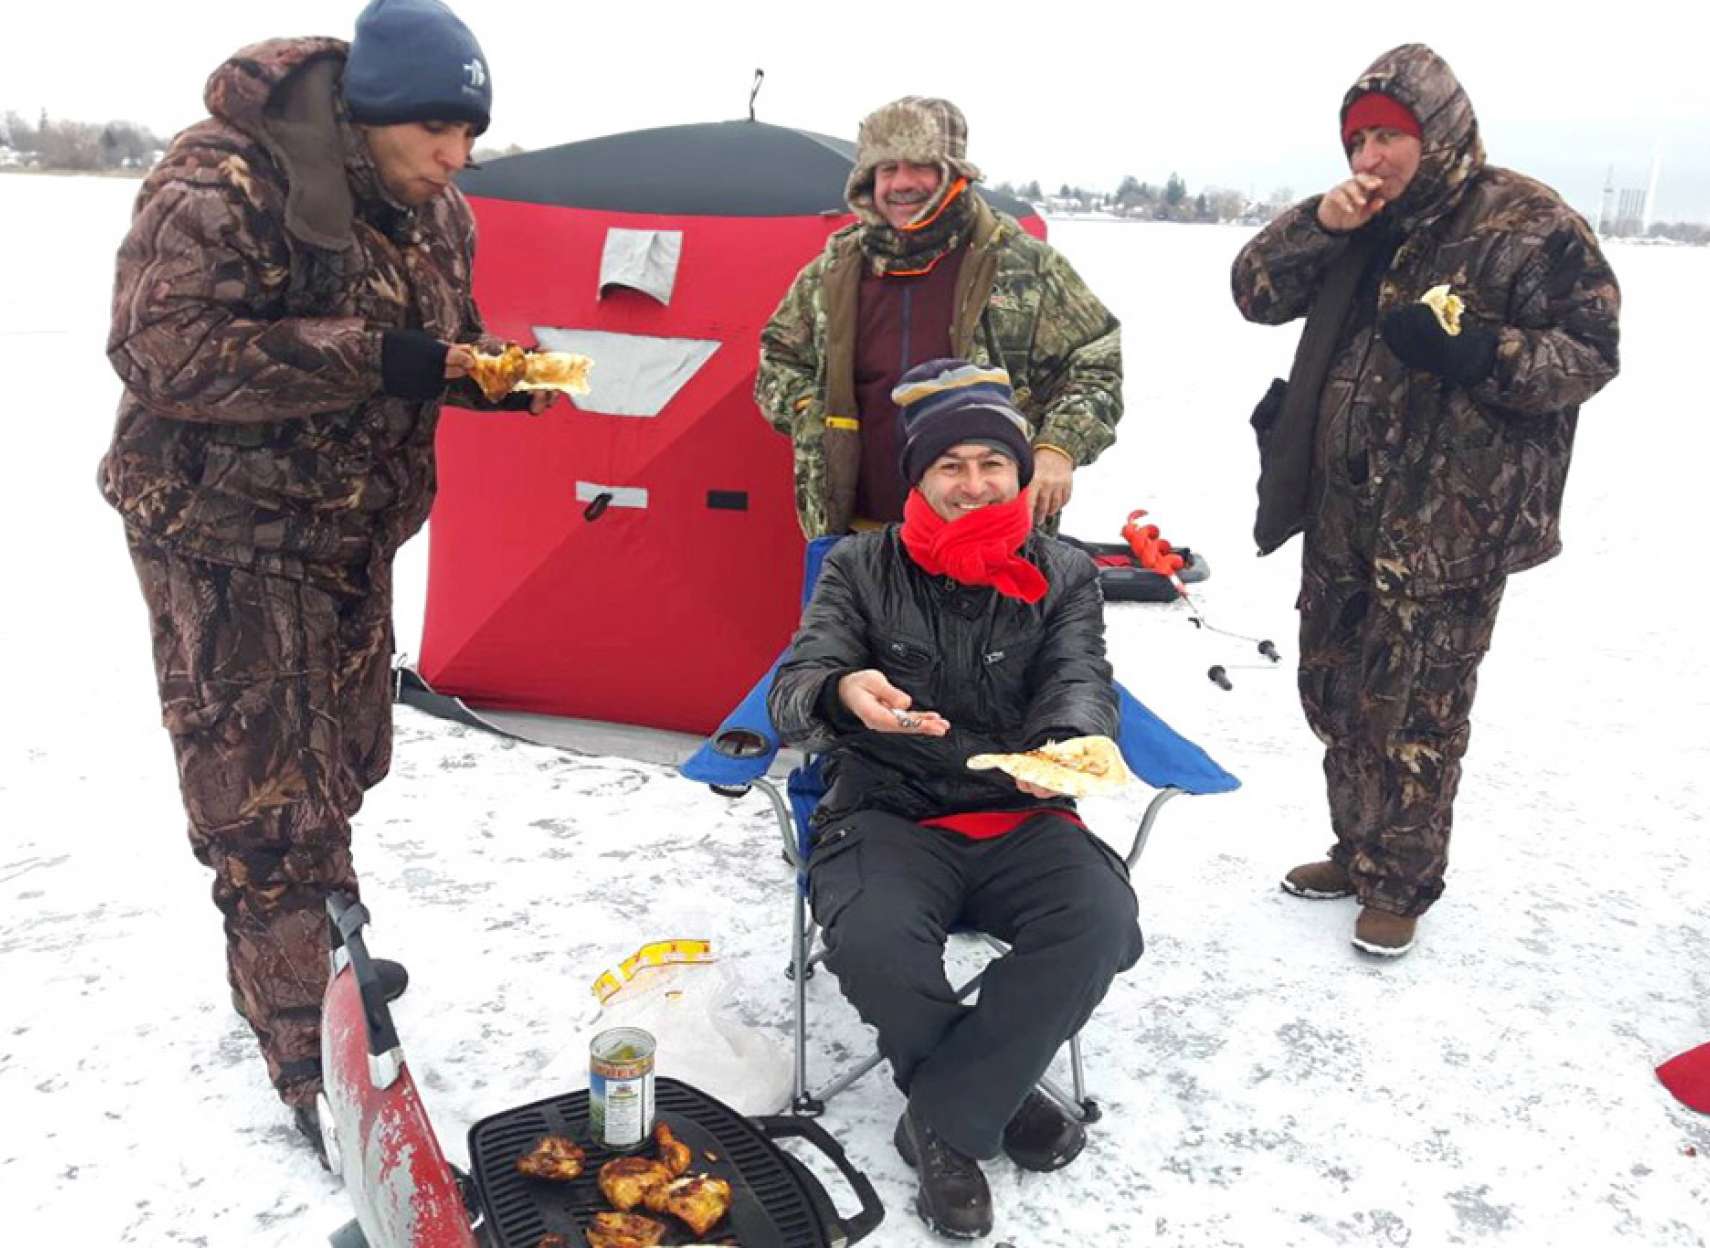 cultire-community-ice-fishing